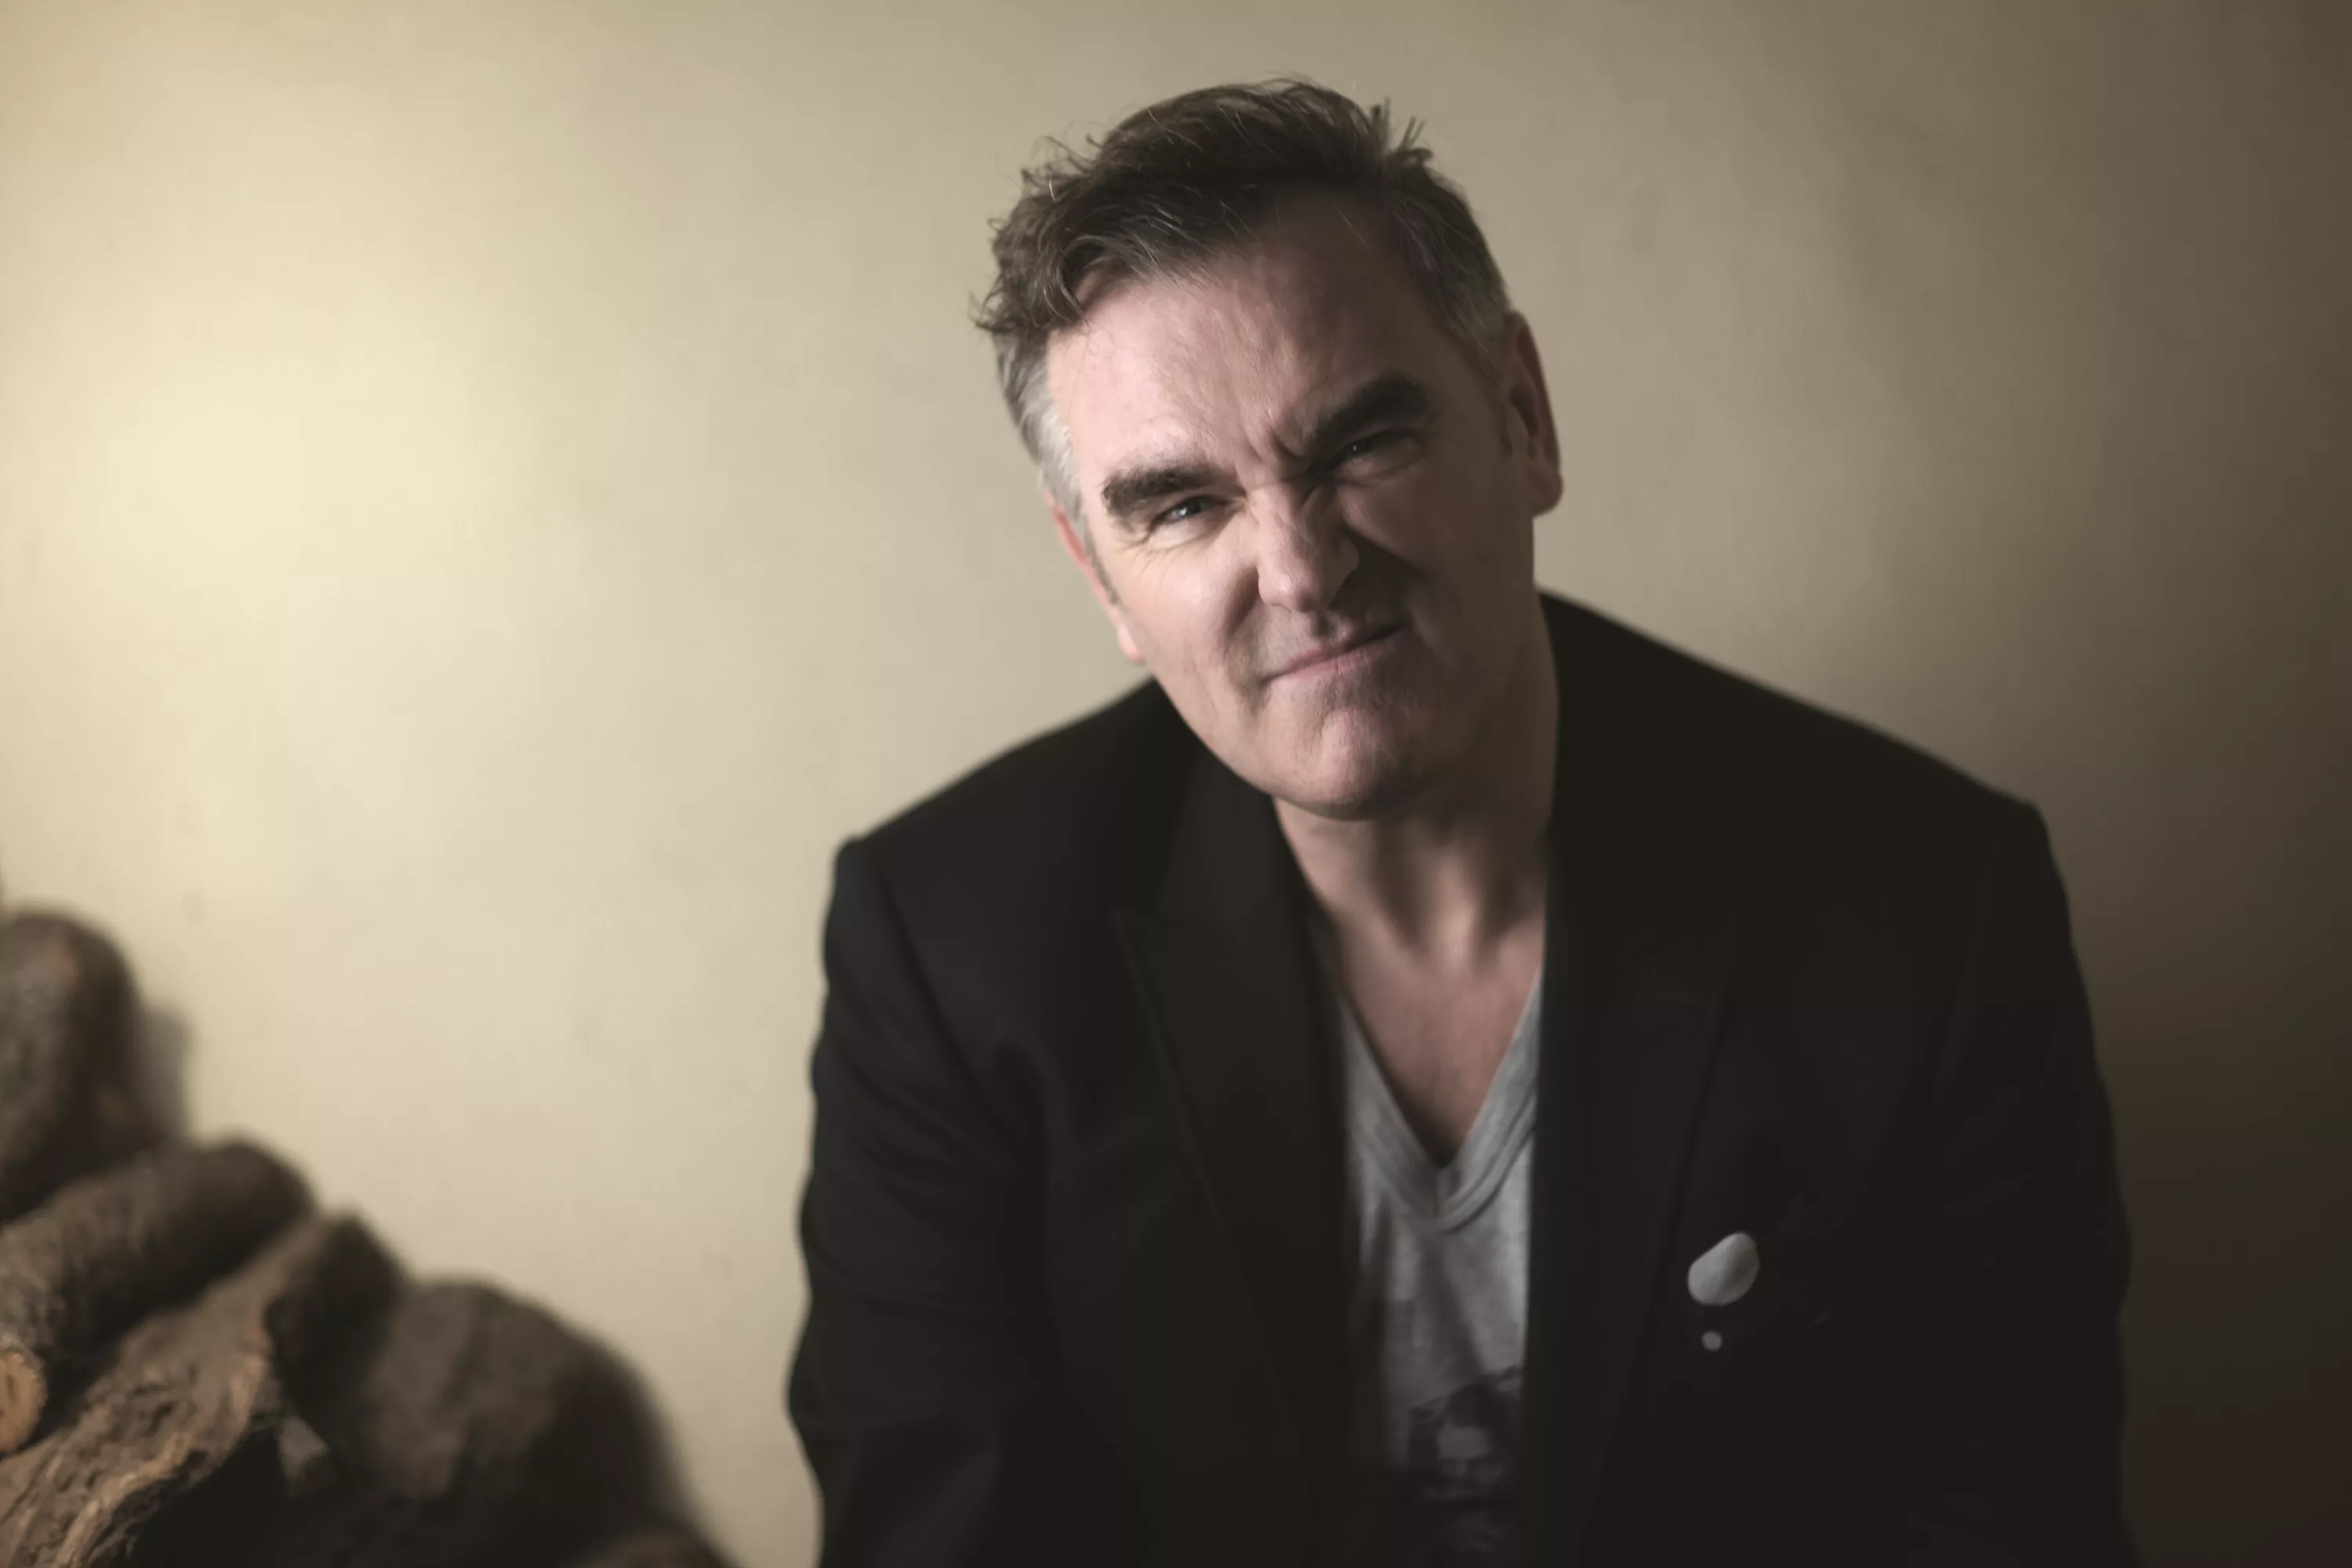 Morrissey – Stadier paa Livets Vei